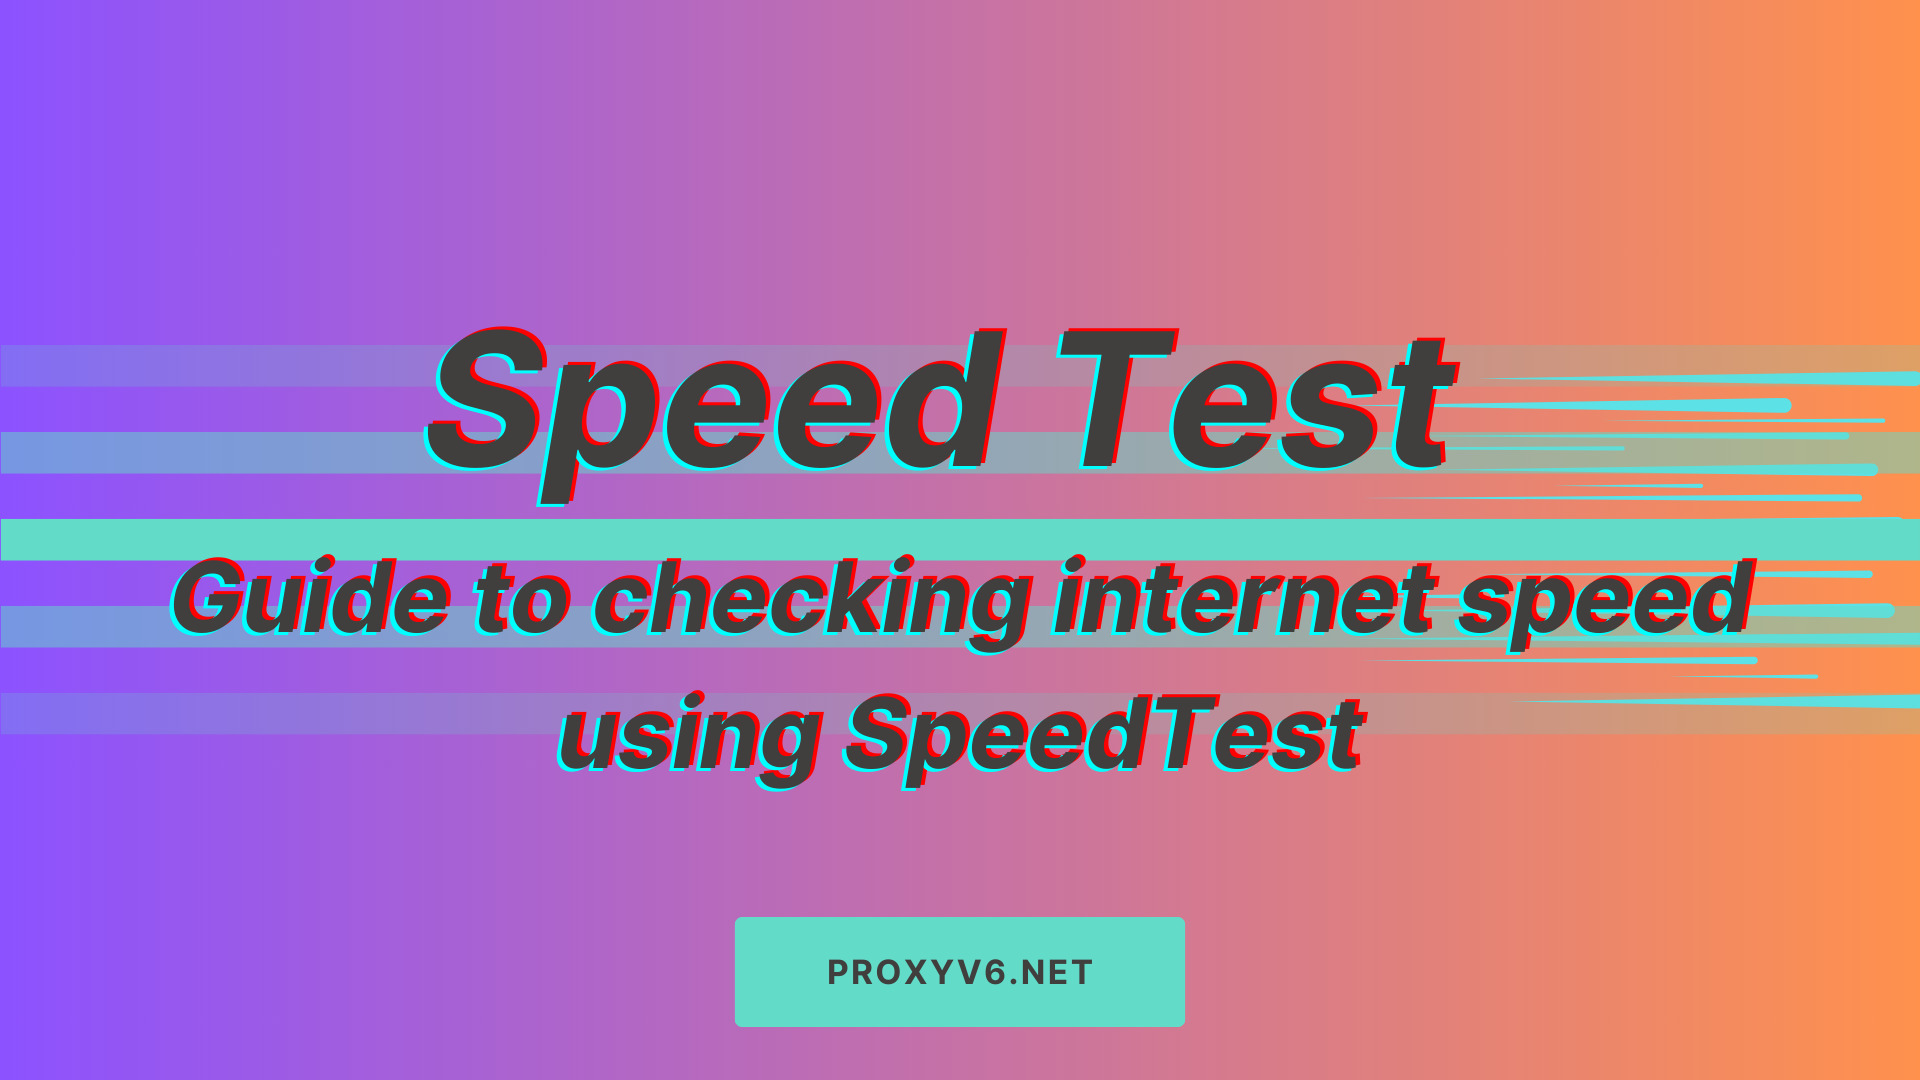 Speed Test - Guide to checking internet speed using SpeedTest